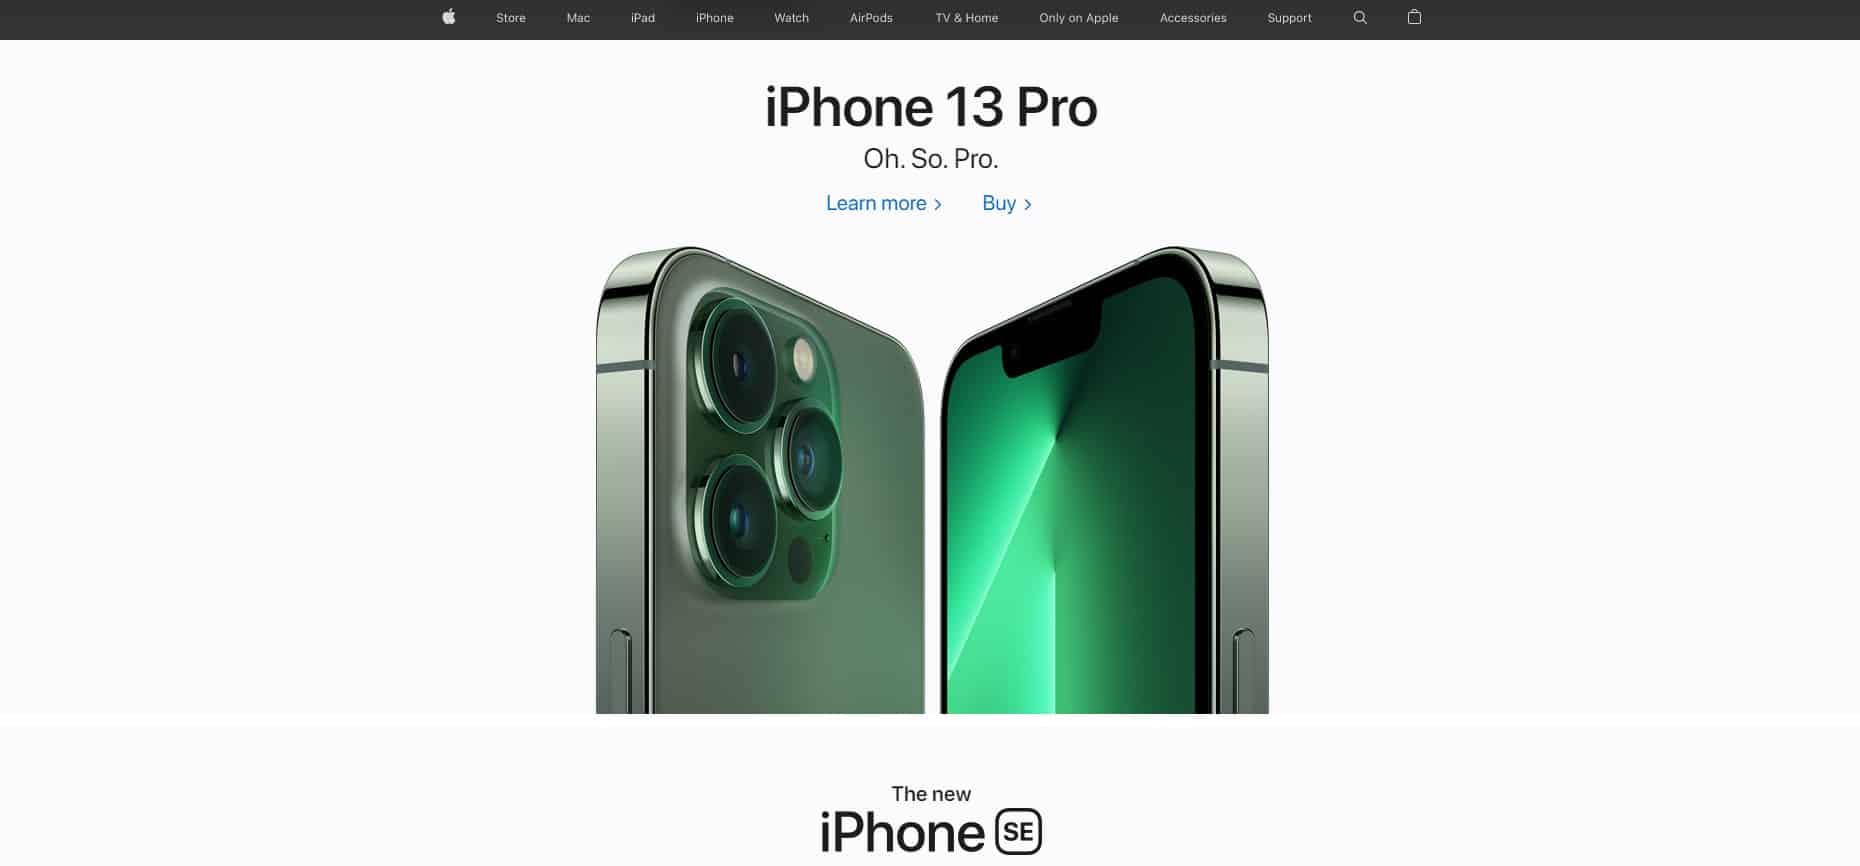 Apple's new improved web design